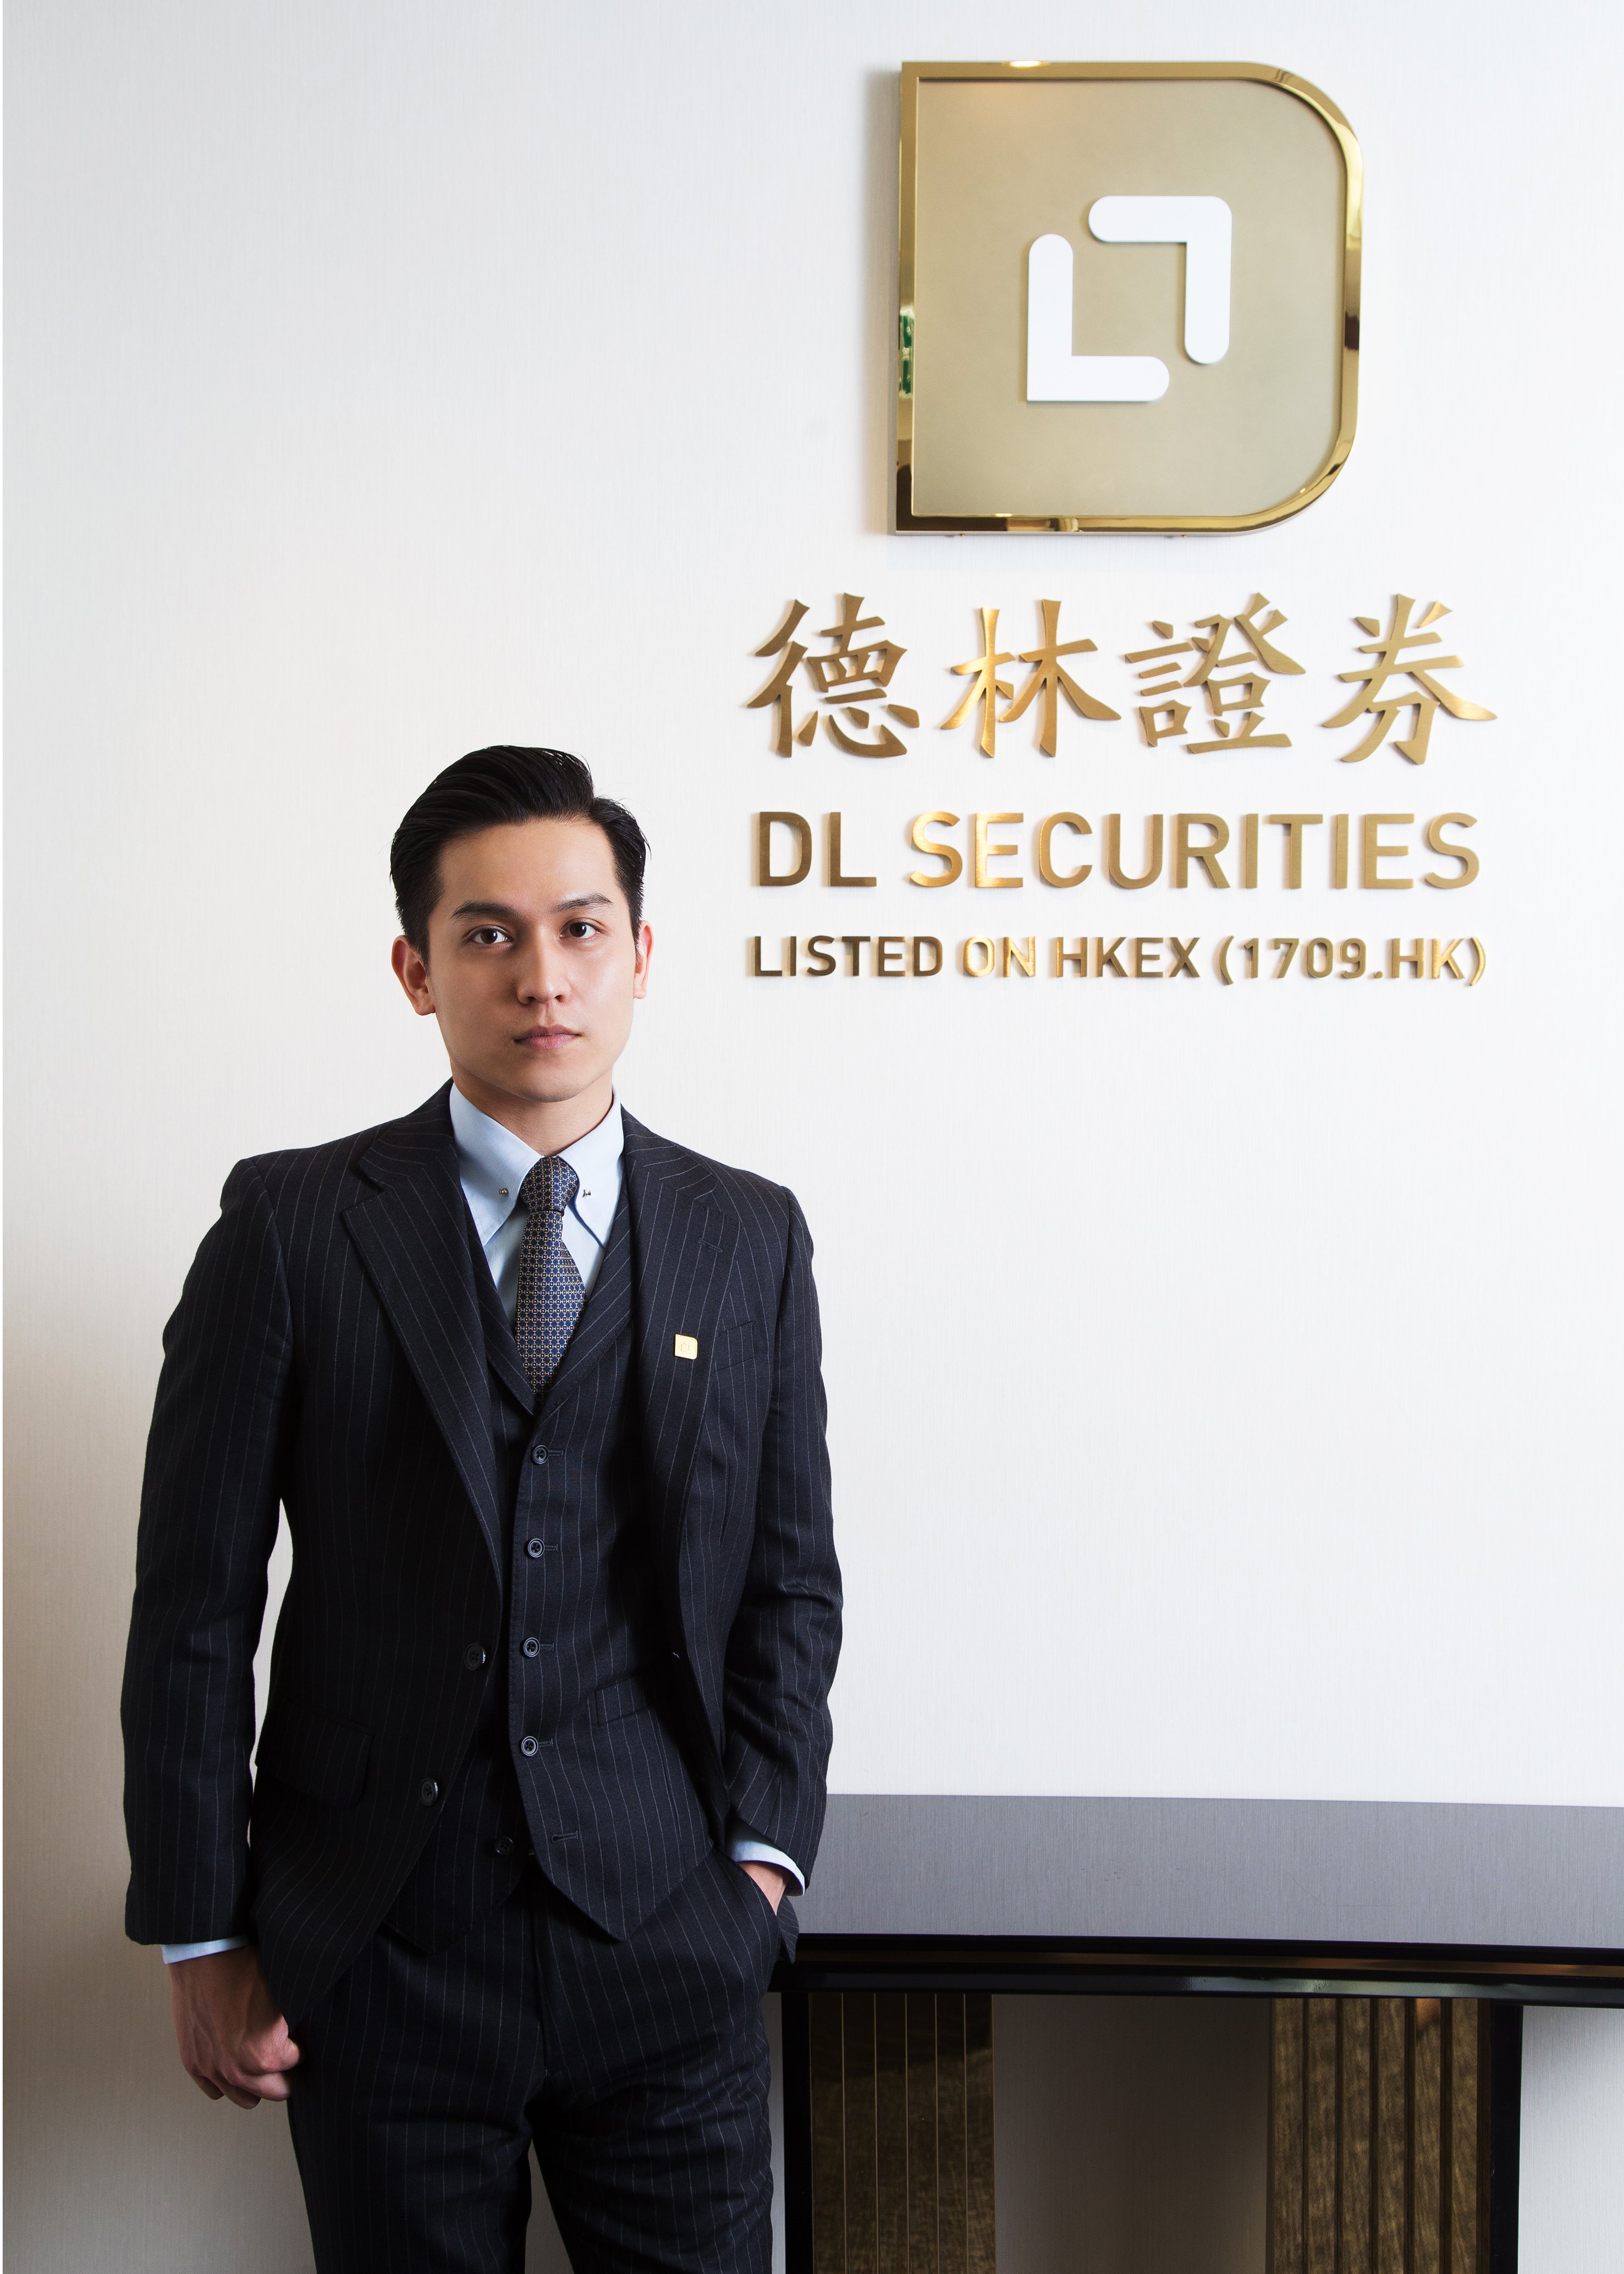 Joseph Lang, chief executive officer of DL Securities